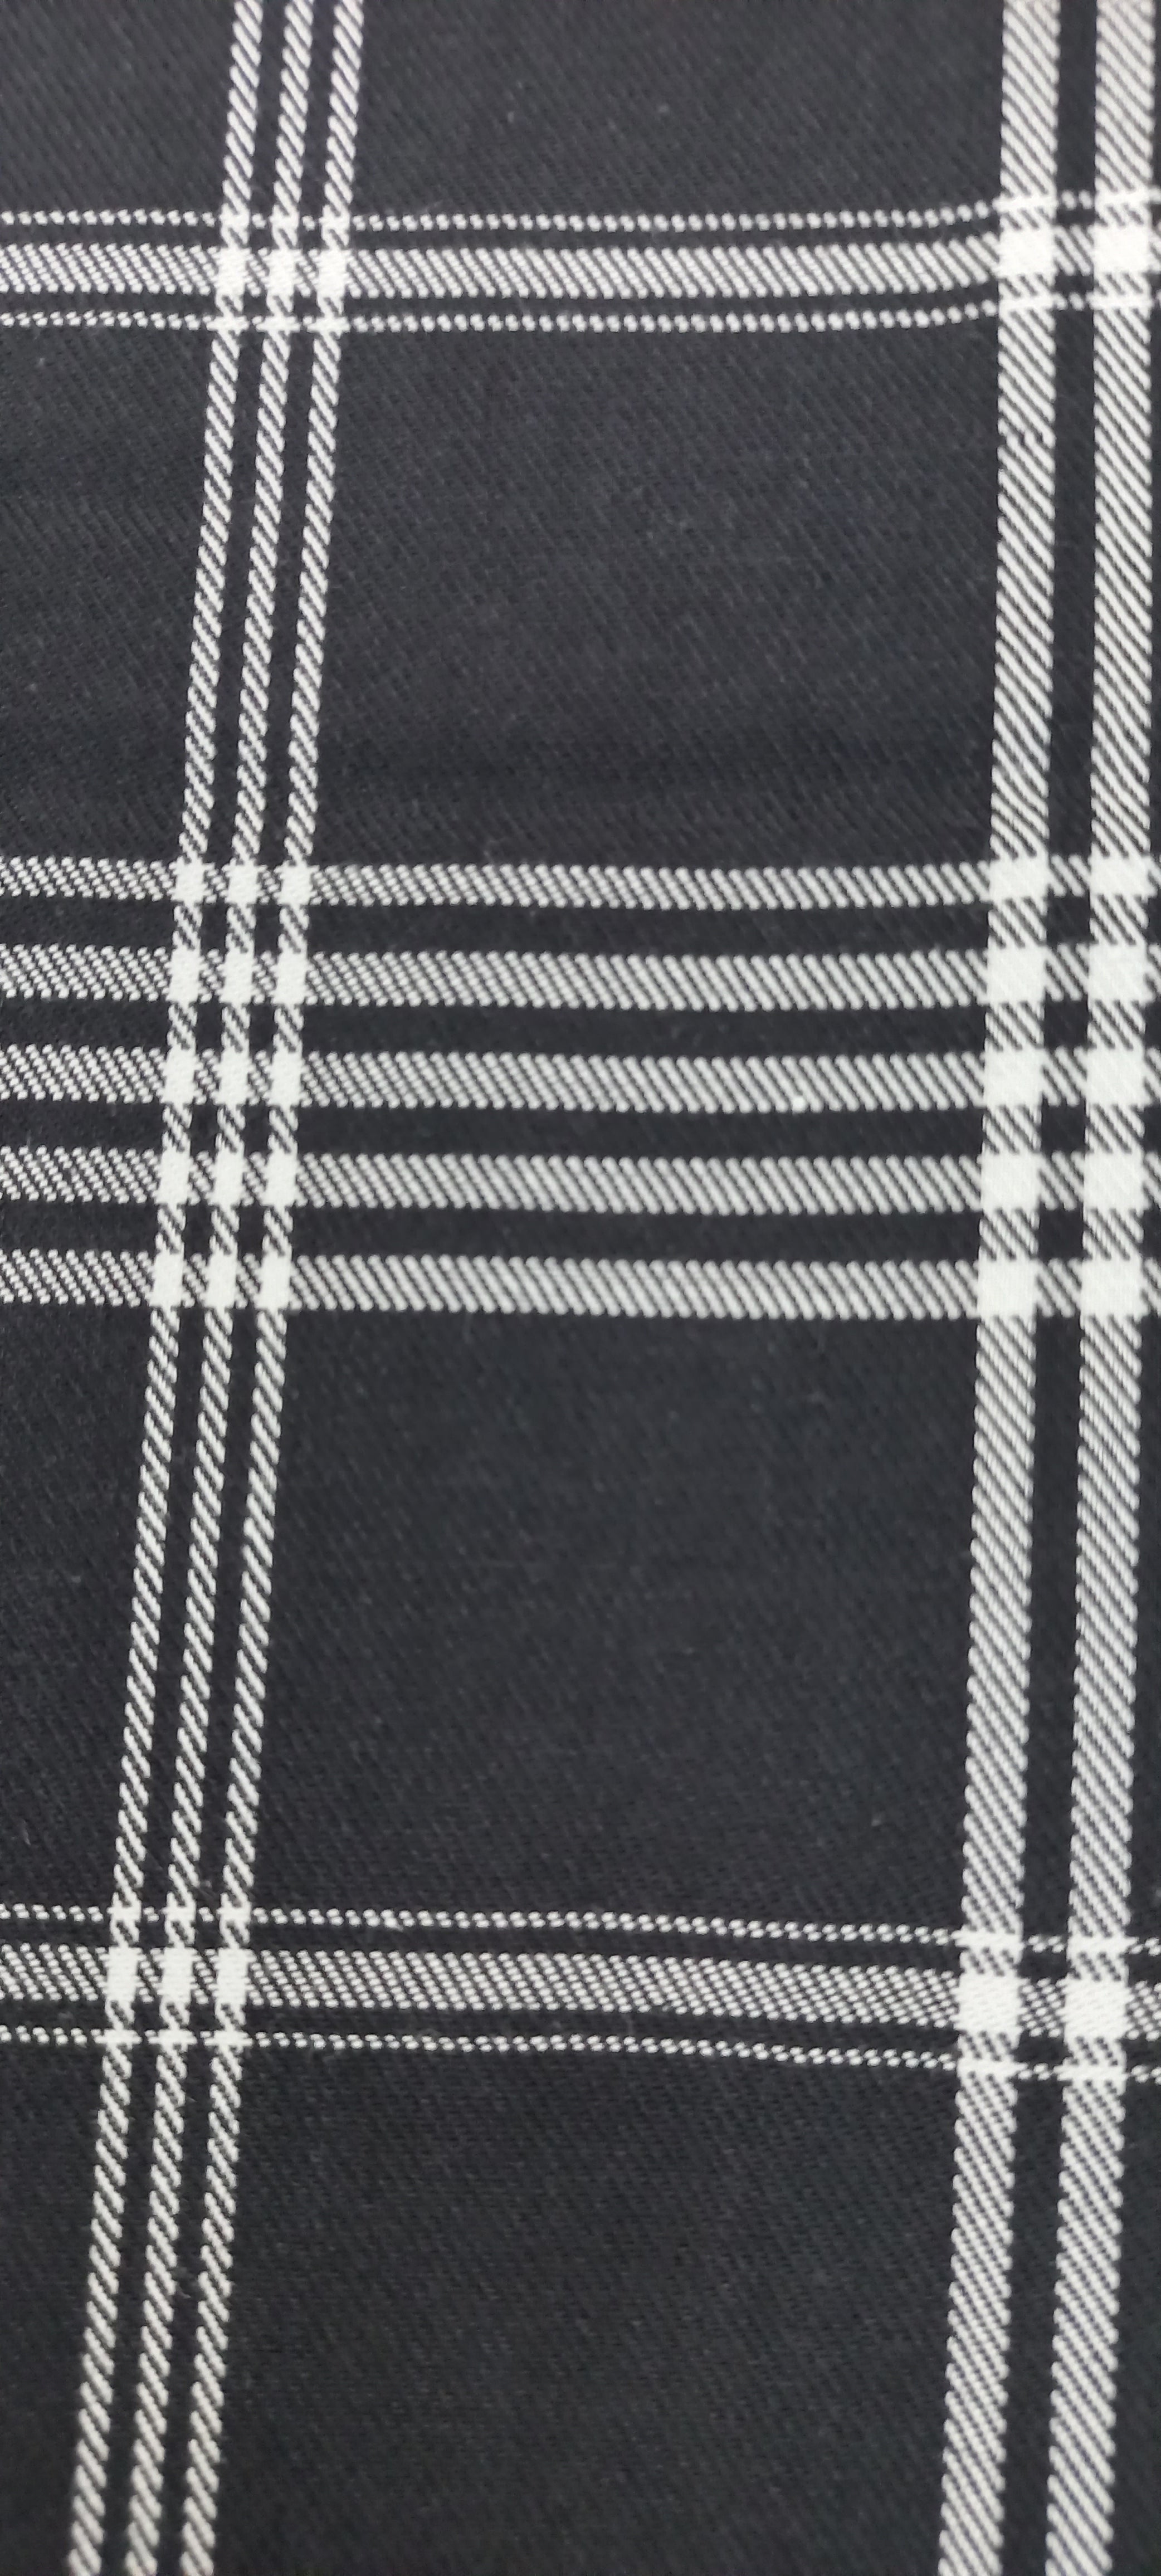 Buy Stripe Fabric For Stitching Mens Shirt at BIGREAMSCOM